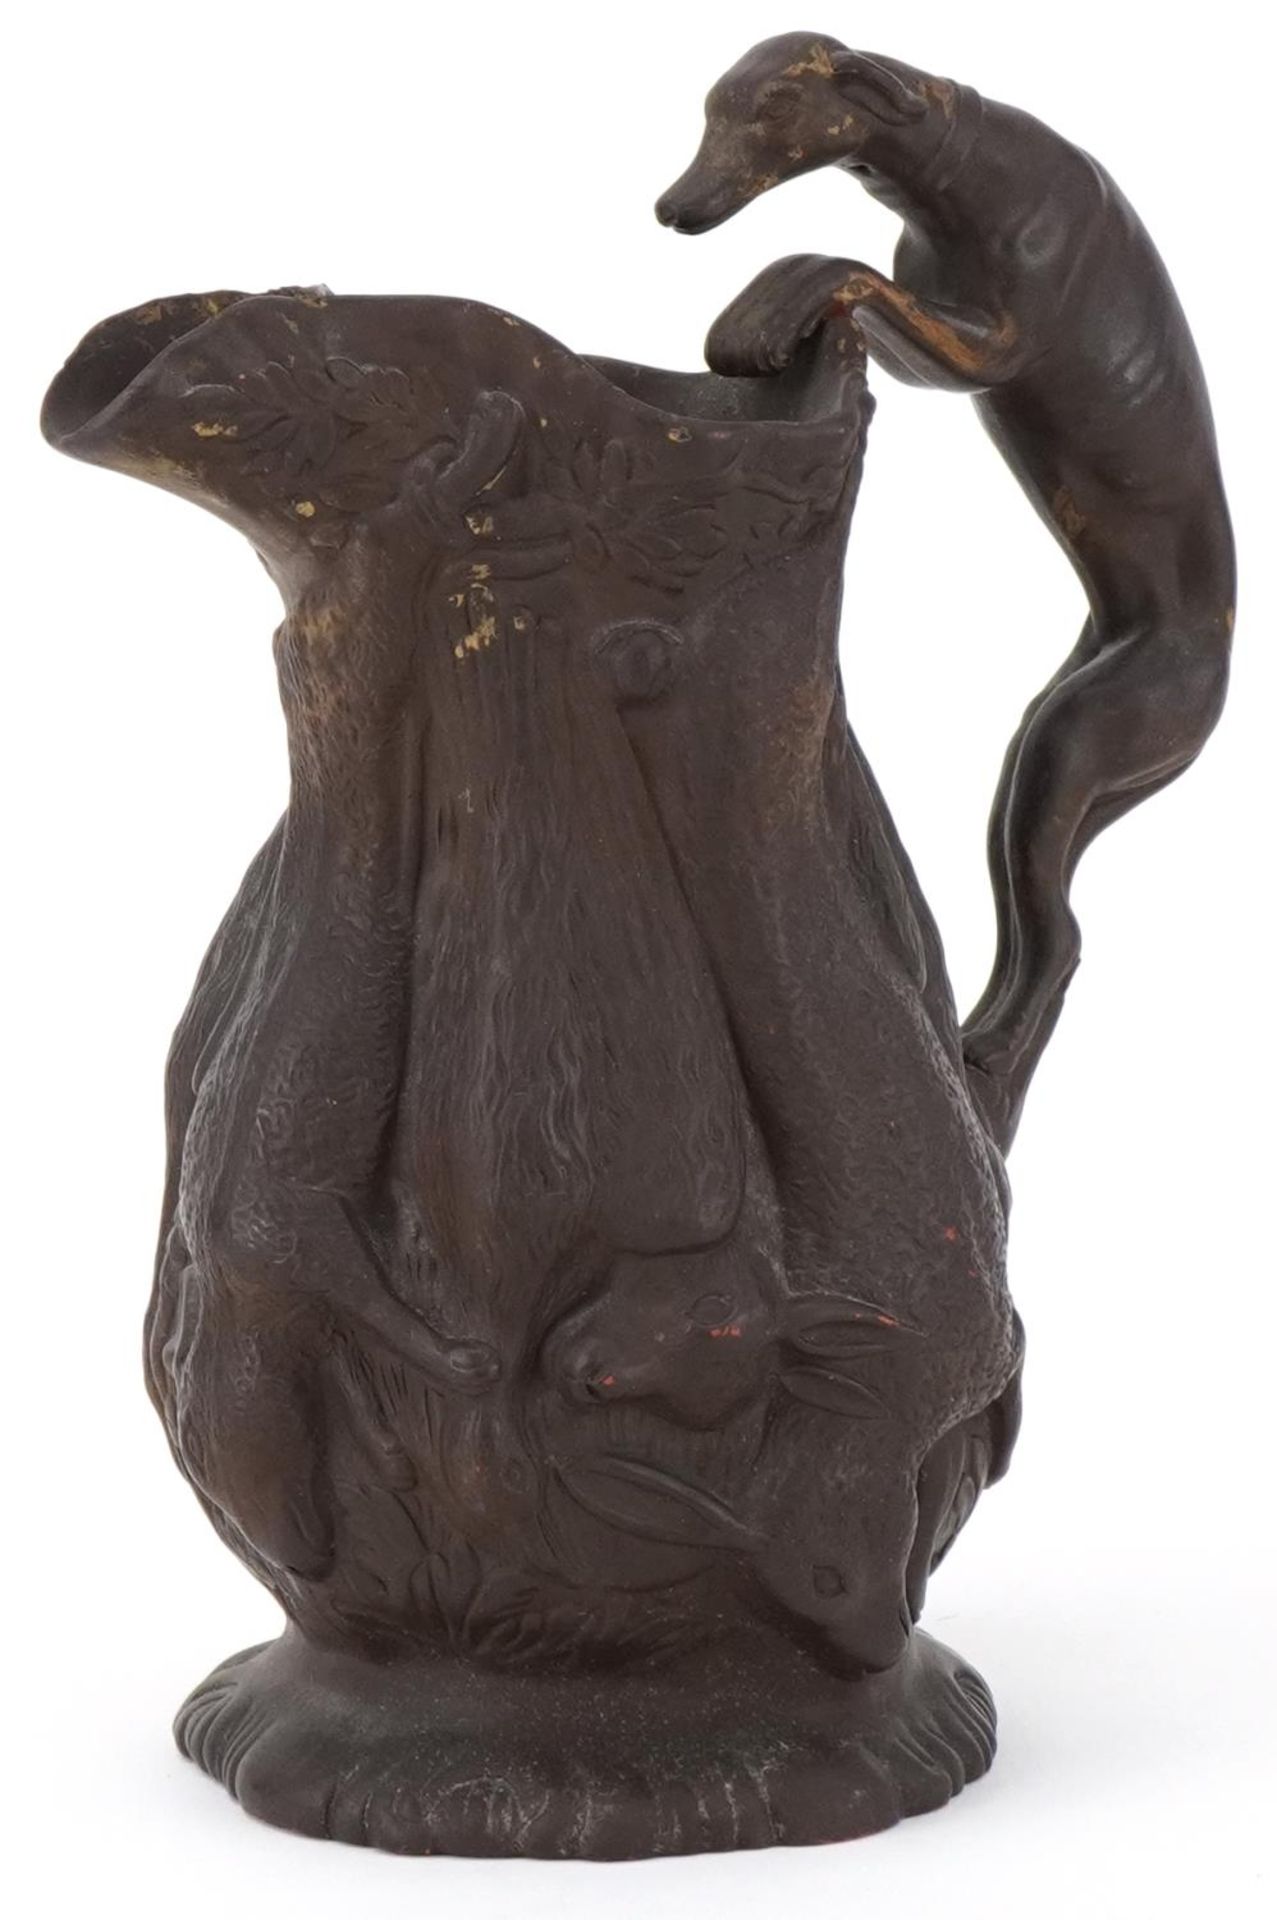 Victorian Wilhelm Schiller & Sons pottery hunting jug with greyhound design handle, 19cm high